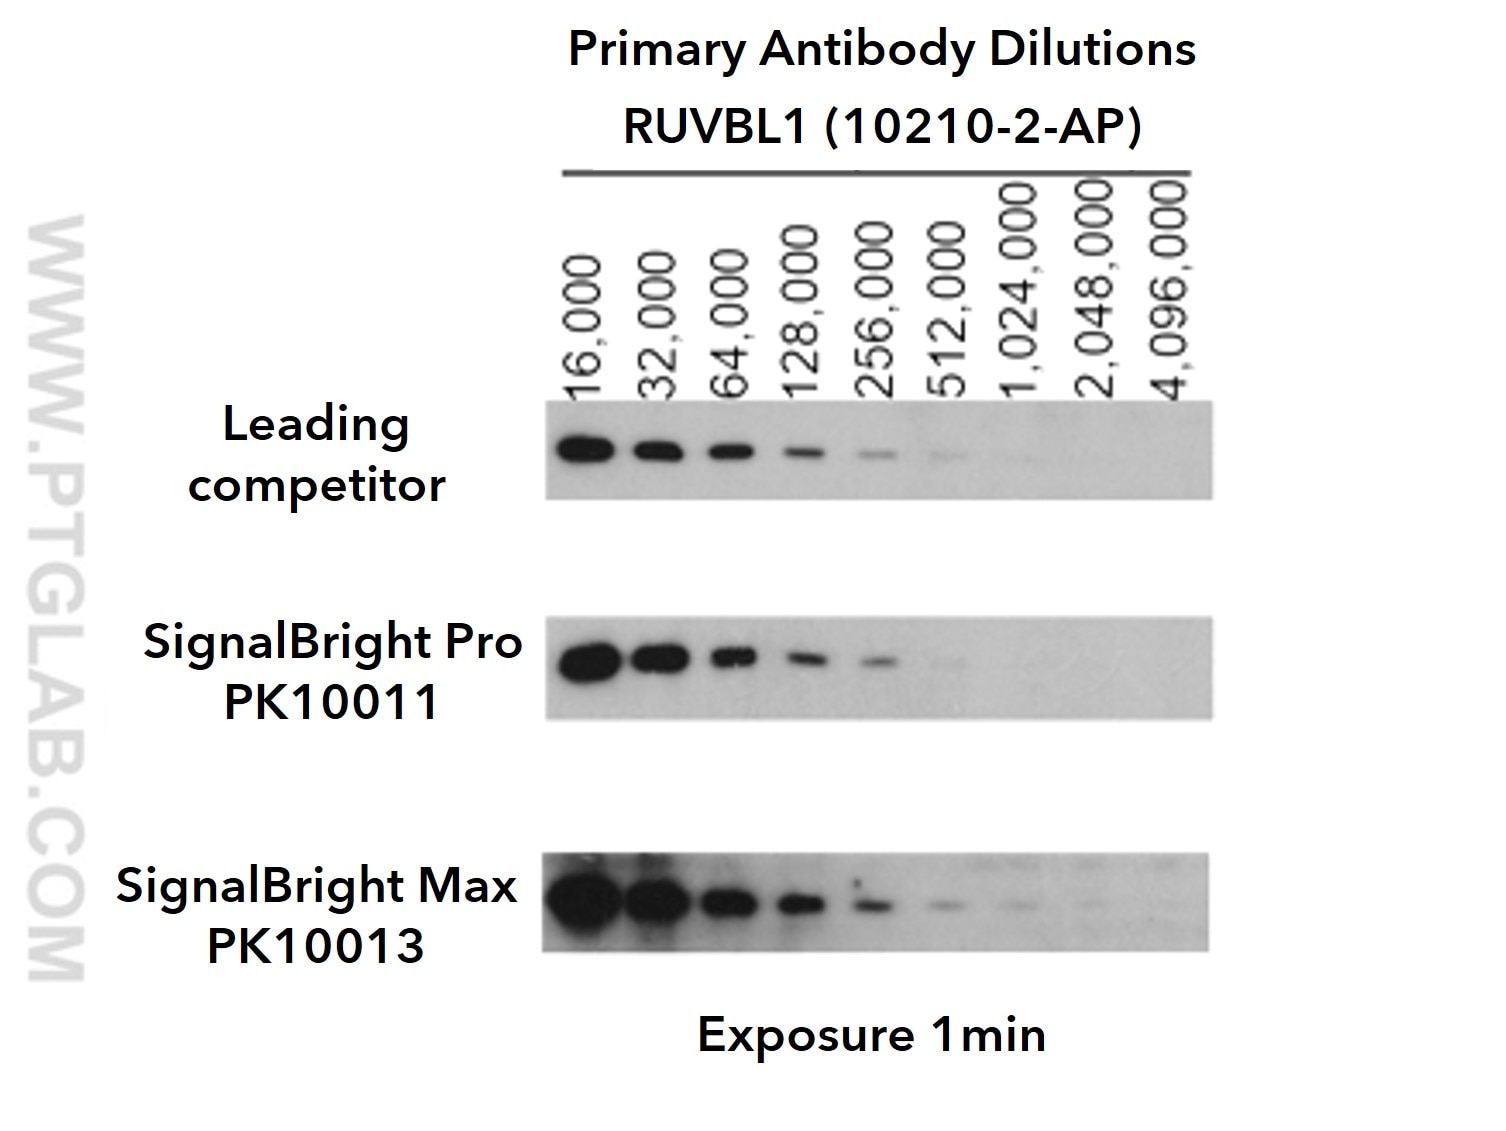 signalbright antibody dilutions